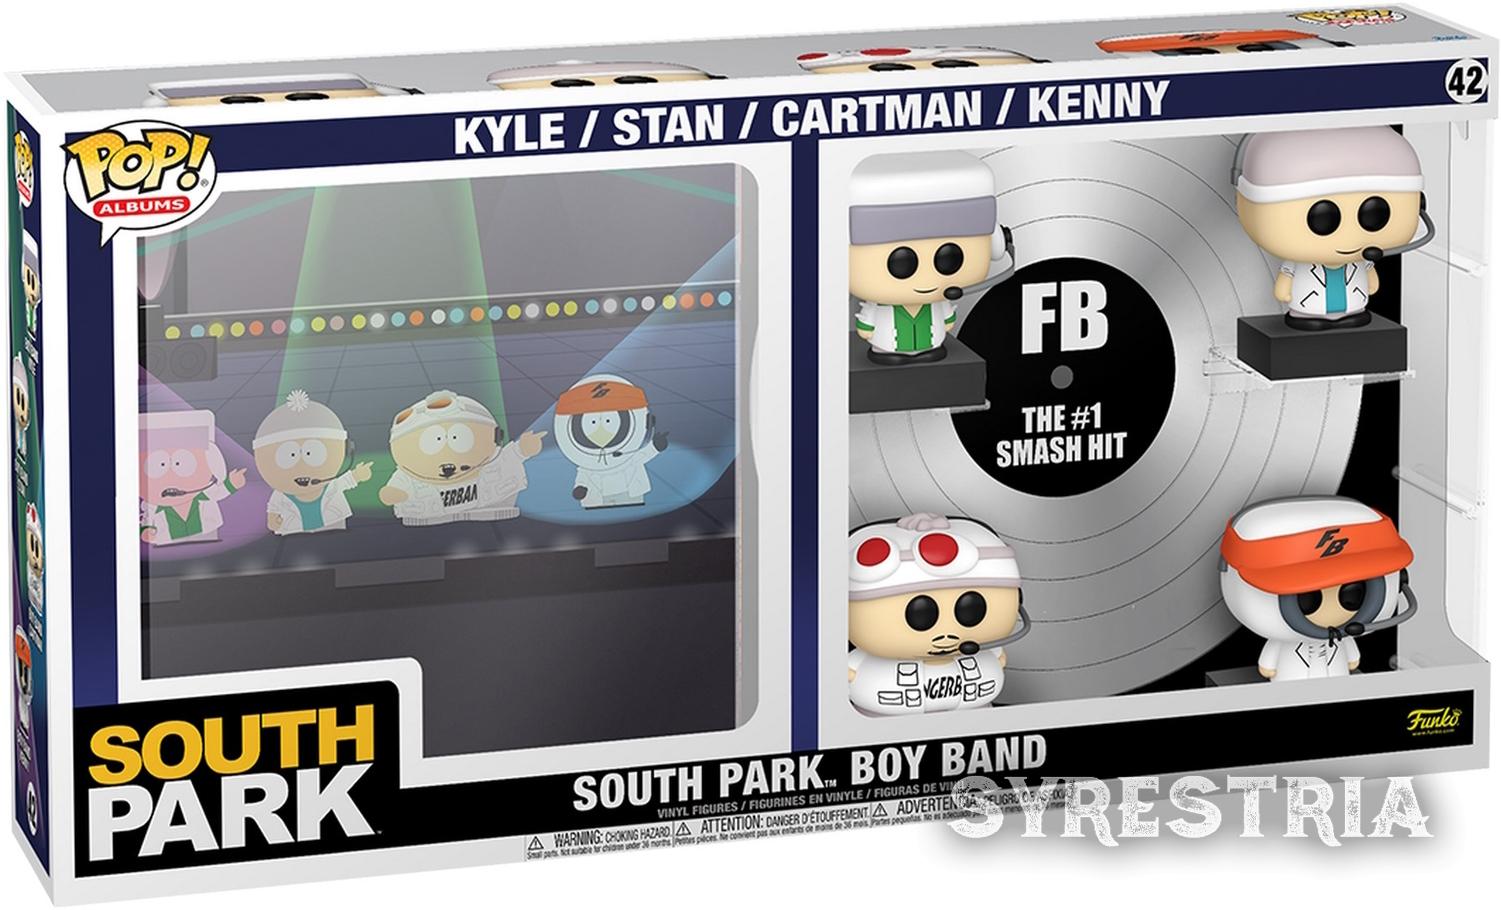 South Park - Boy Band Kyle Stan Cartman Kenny 42 - Funko Pop! Albums - Vinyl Figur